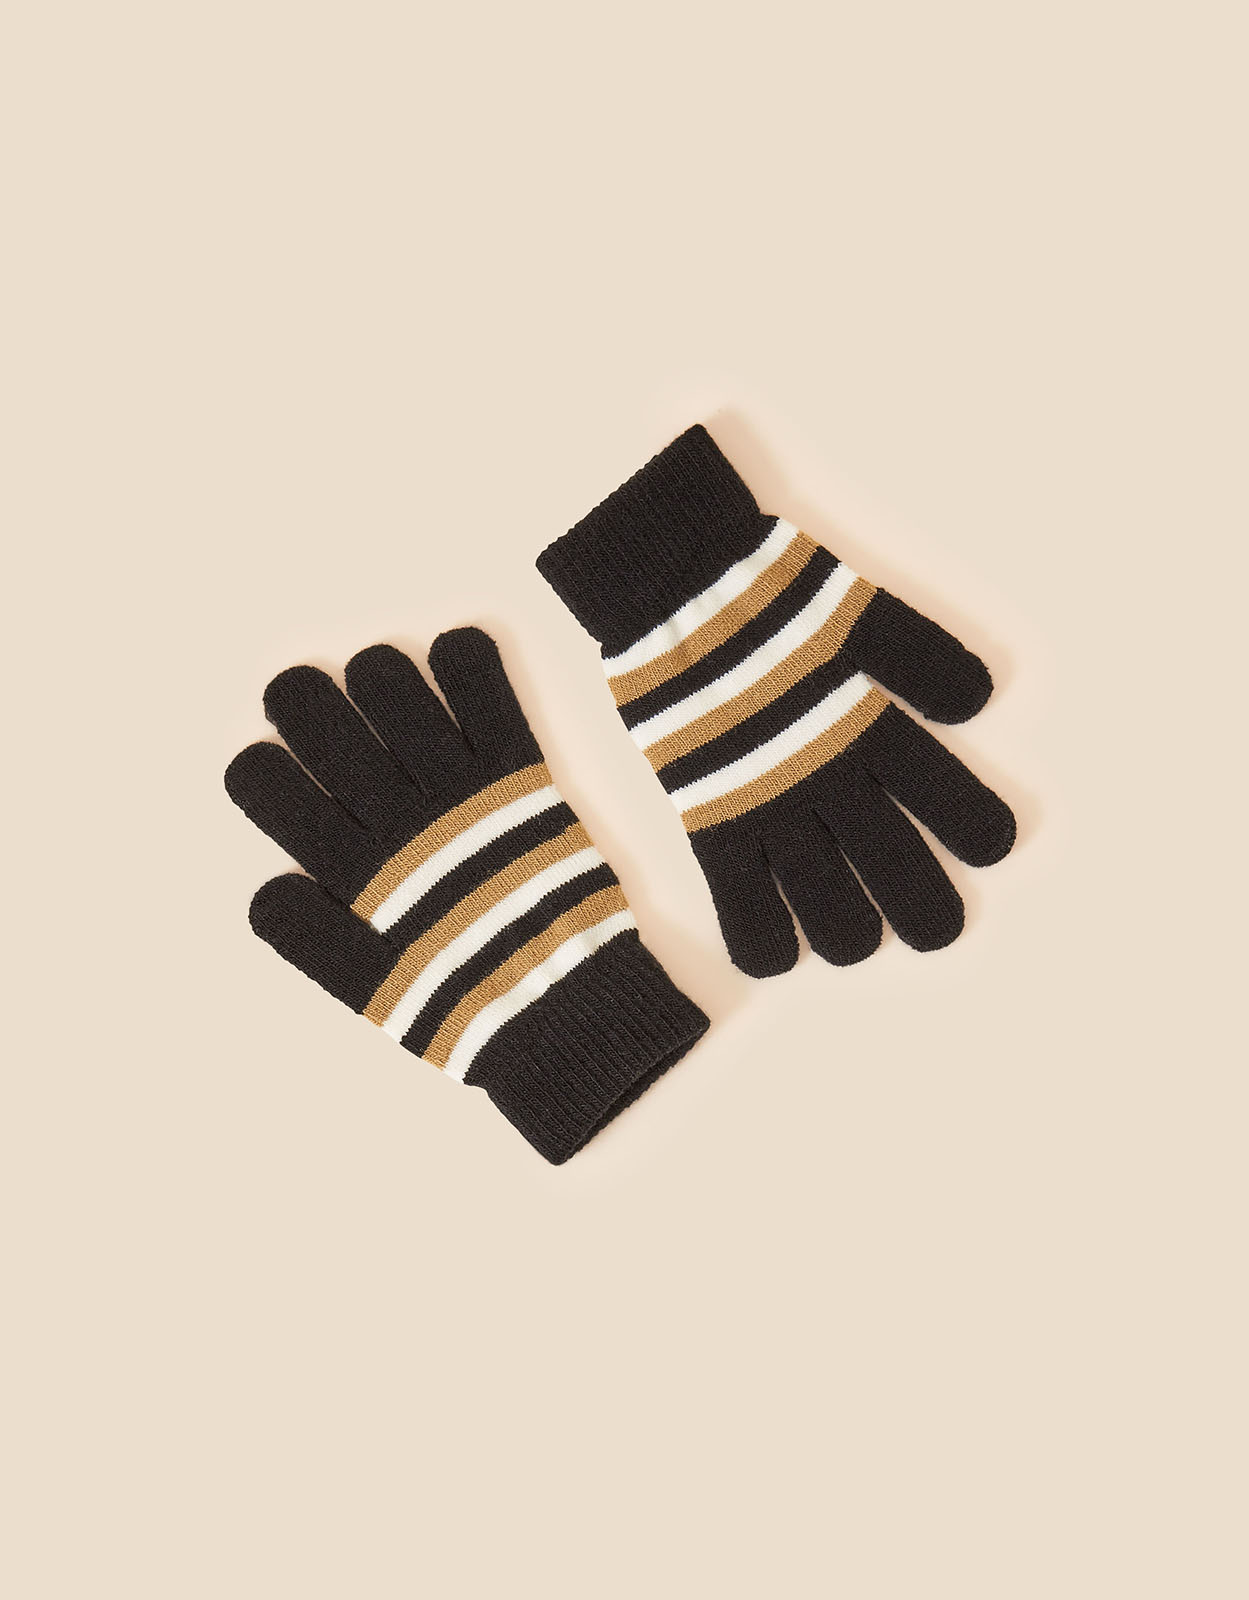 Accessorize Black, White and Gold Stripe Stretch Touchscreen Gloves, Size: 21cm